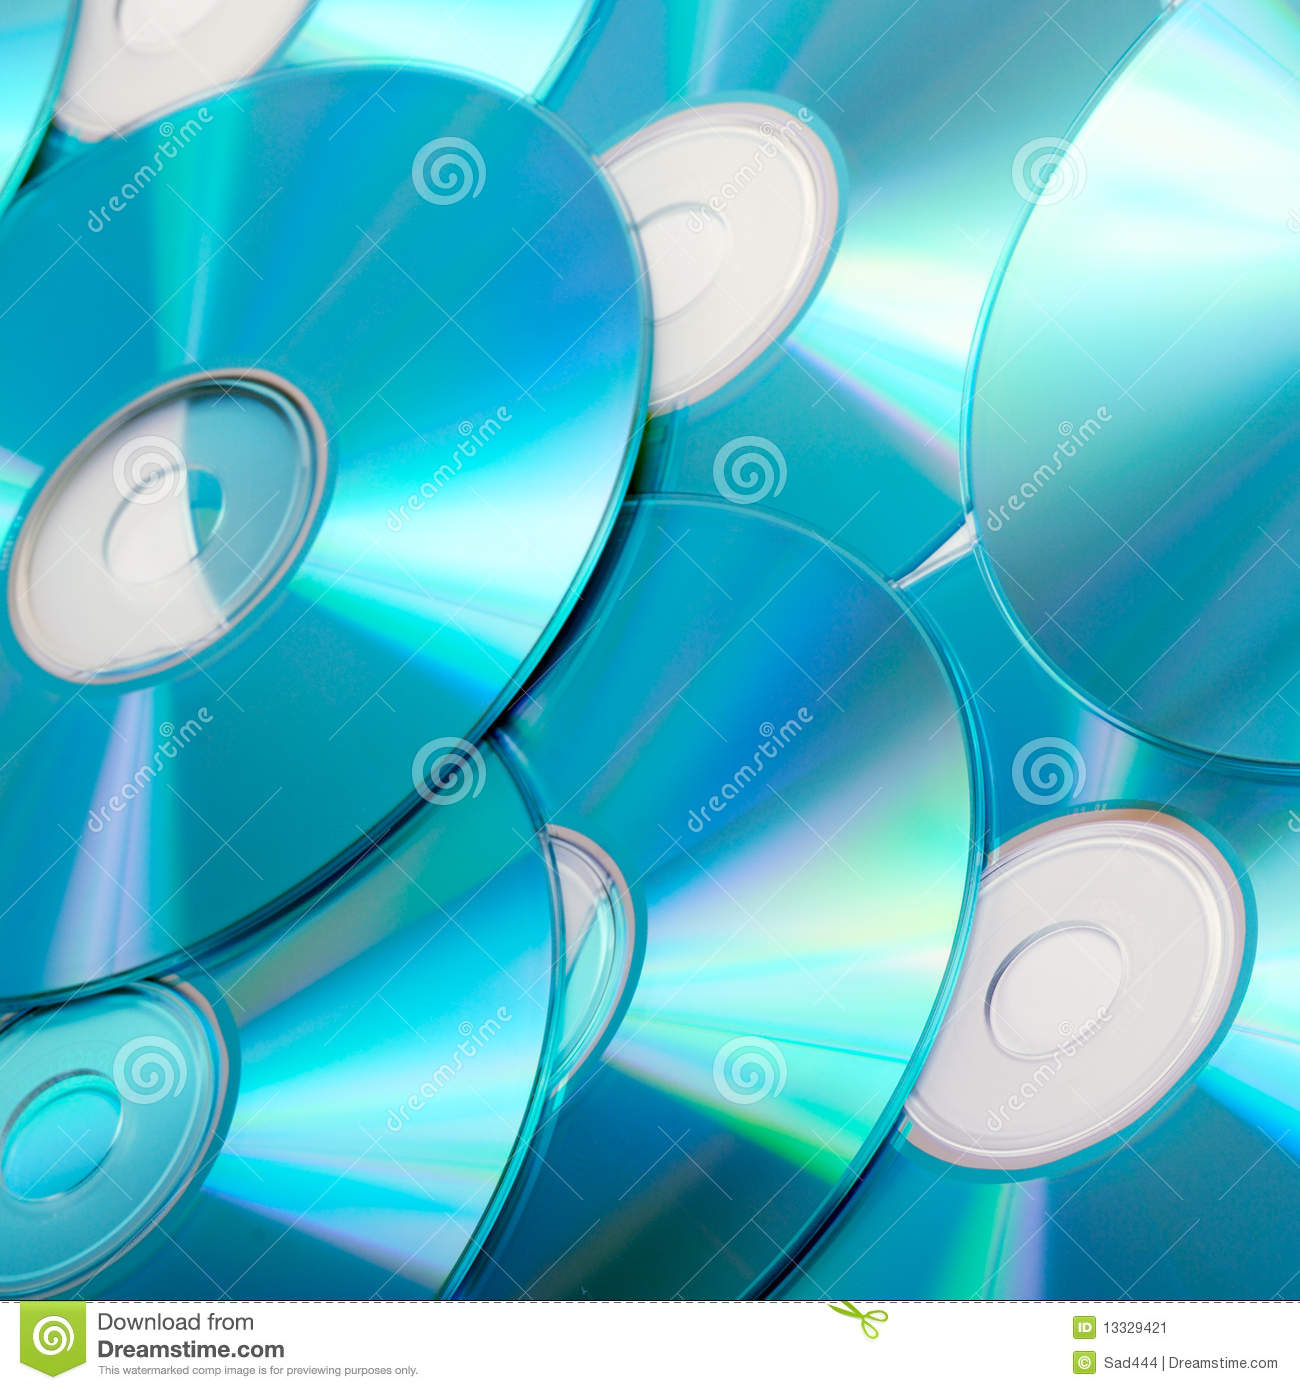 Cd Dvd Blu Ray Disk Abstract  Closeup